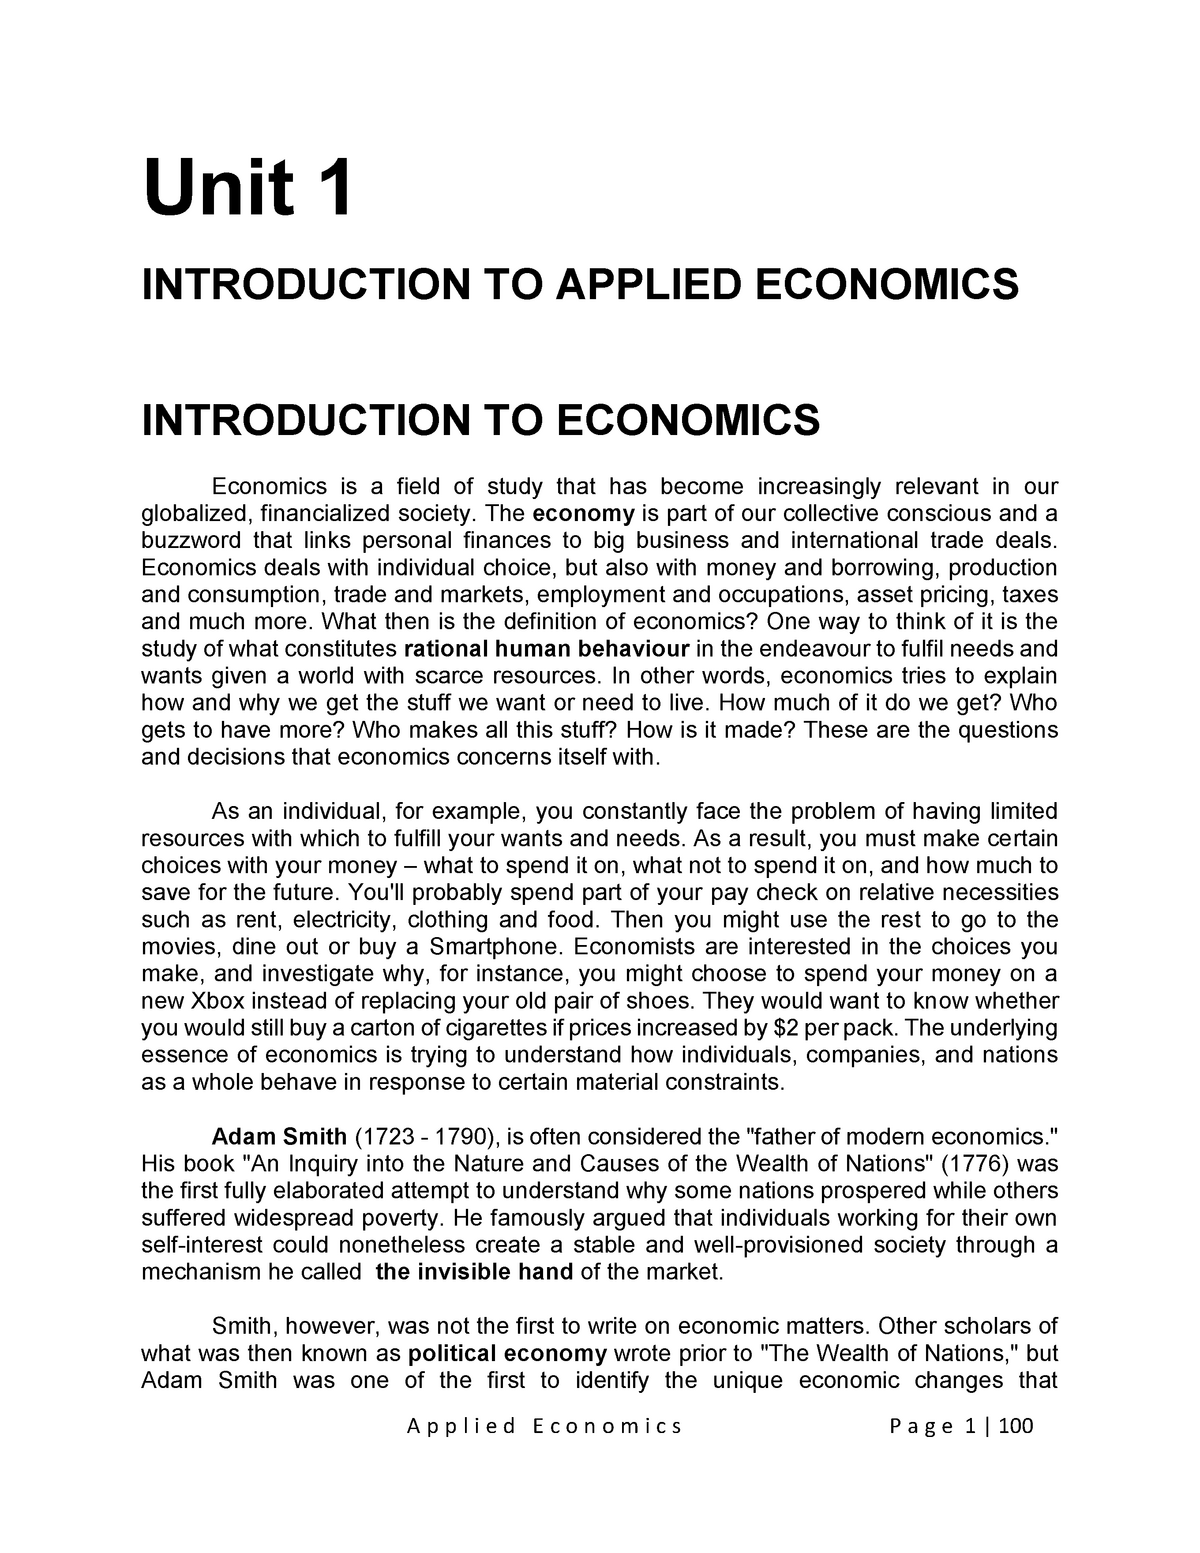 essay about applied economics brainly